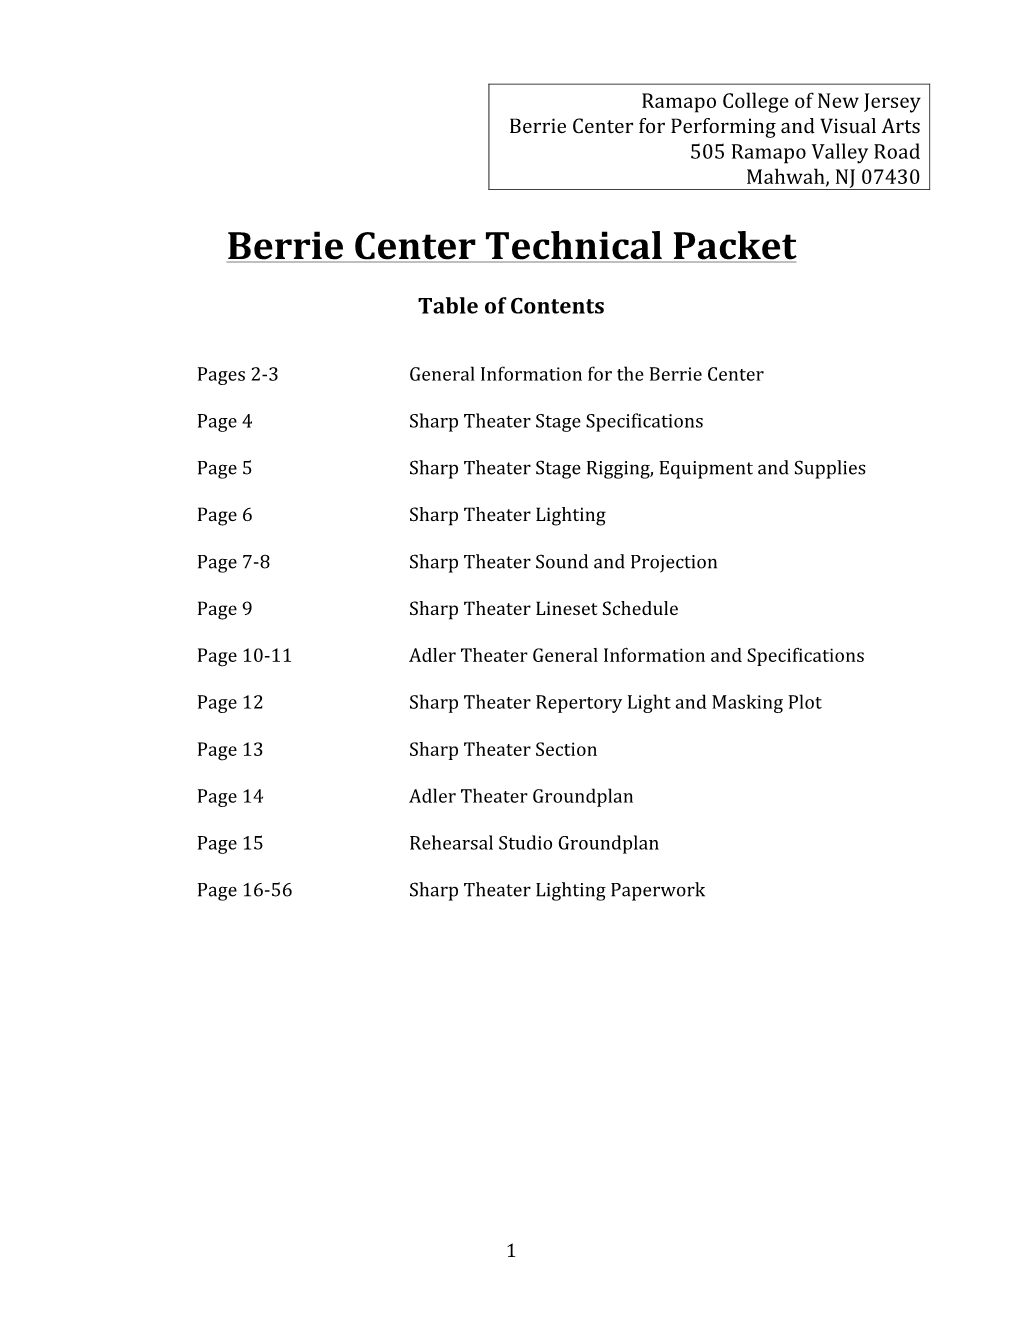 Berrie Center Technical Packet